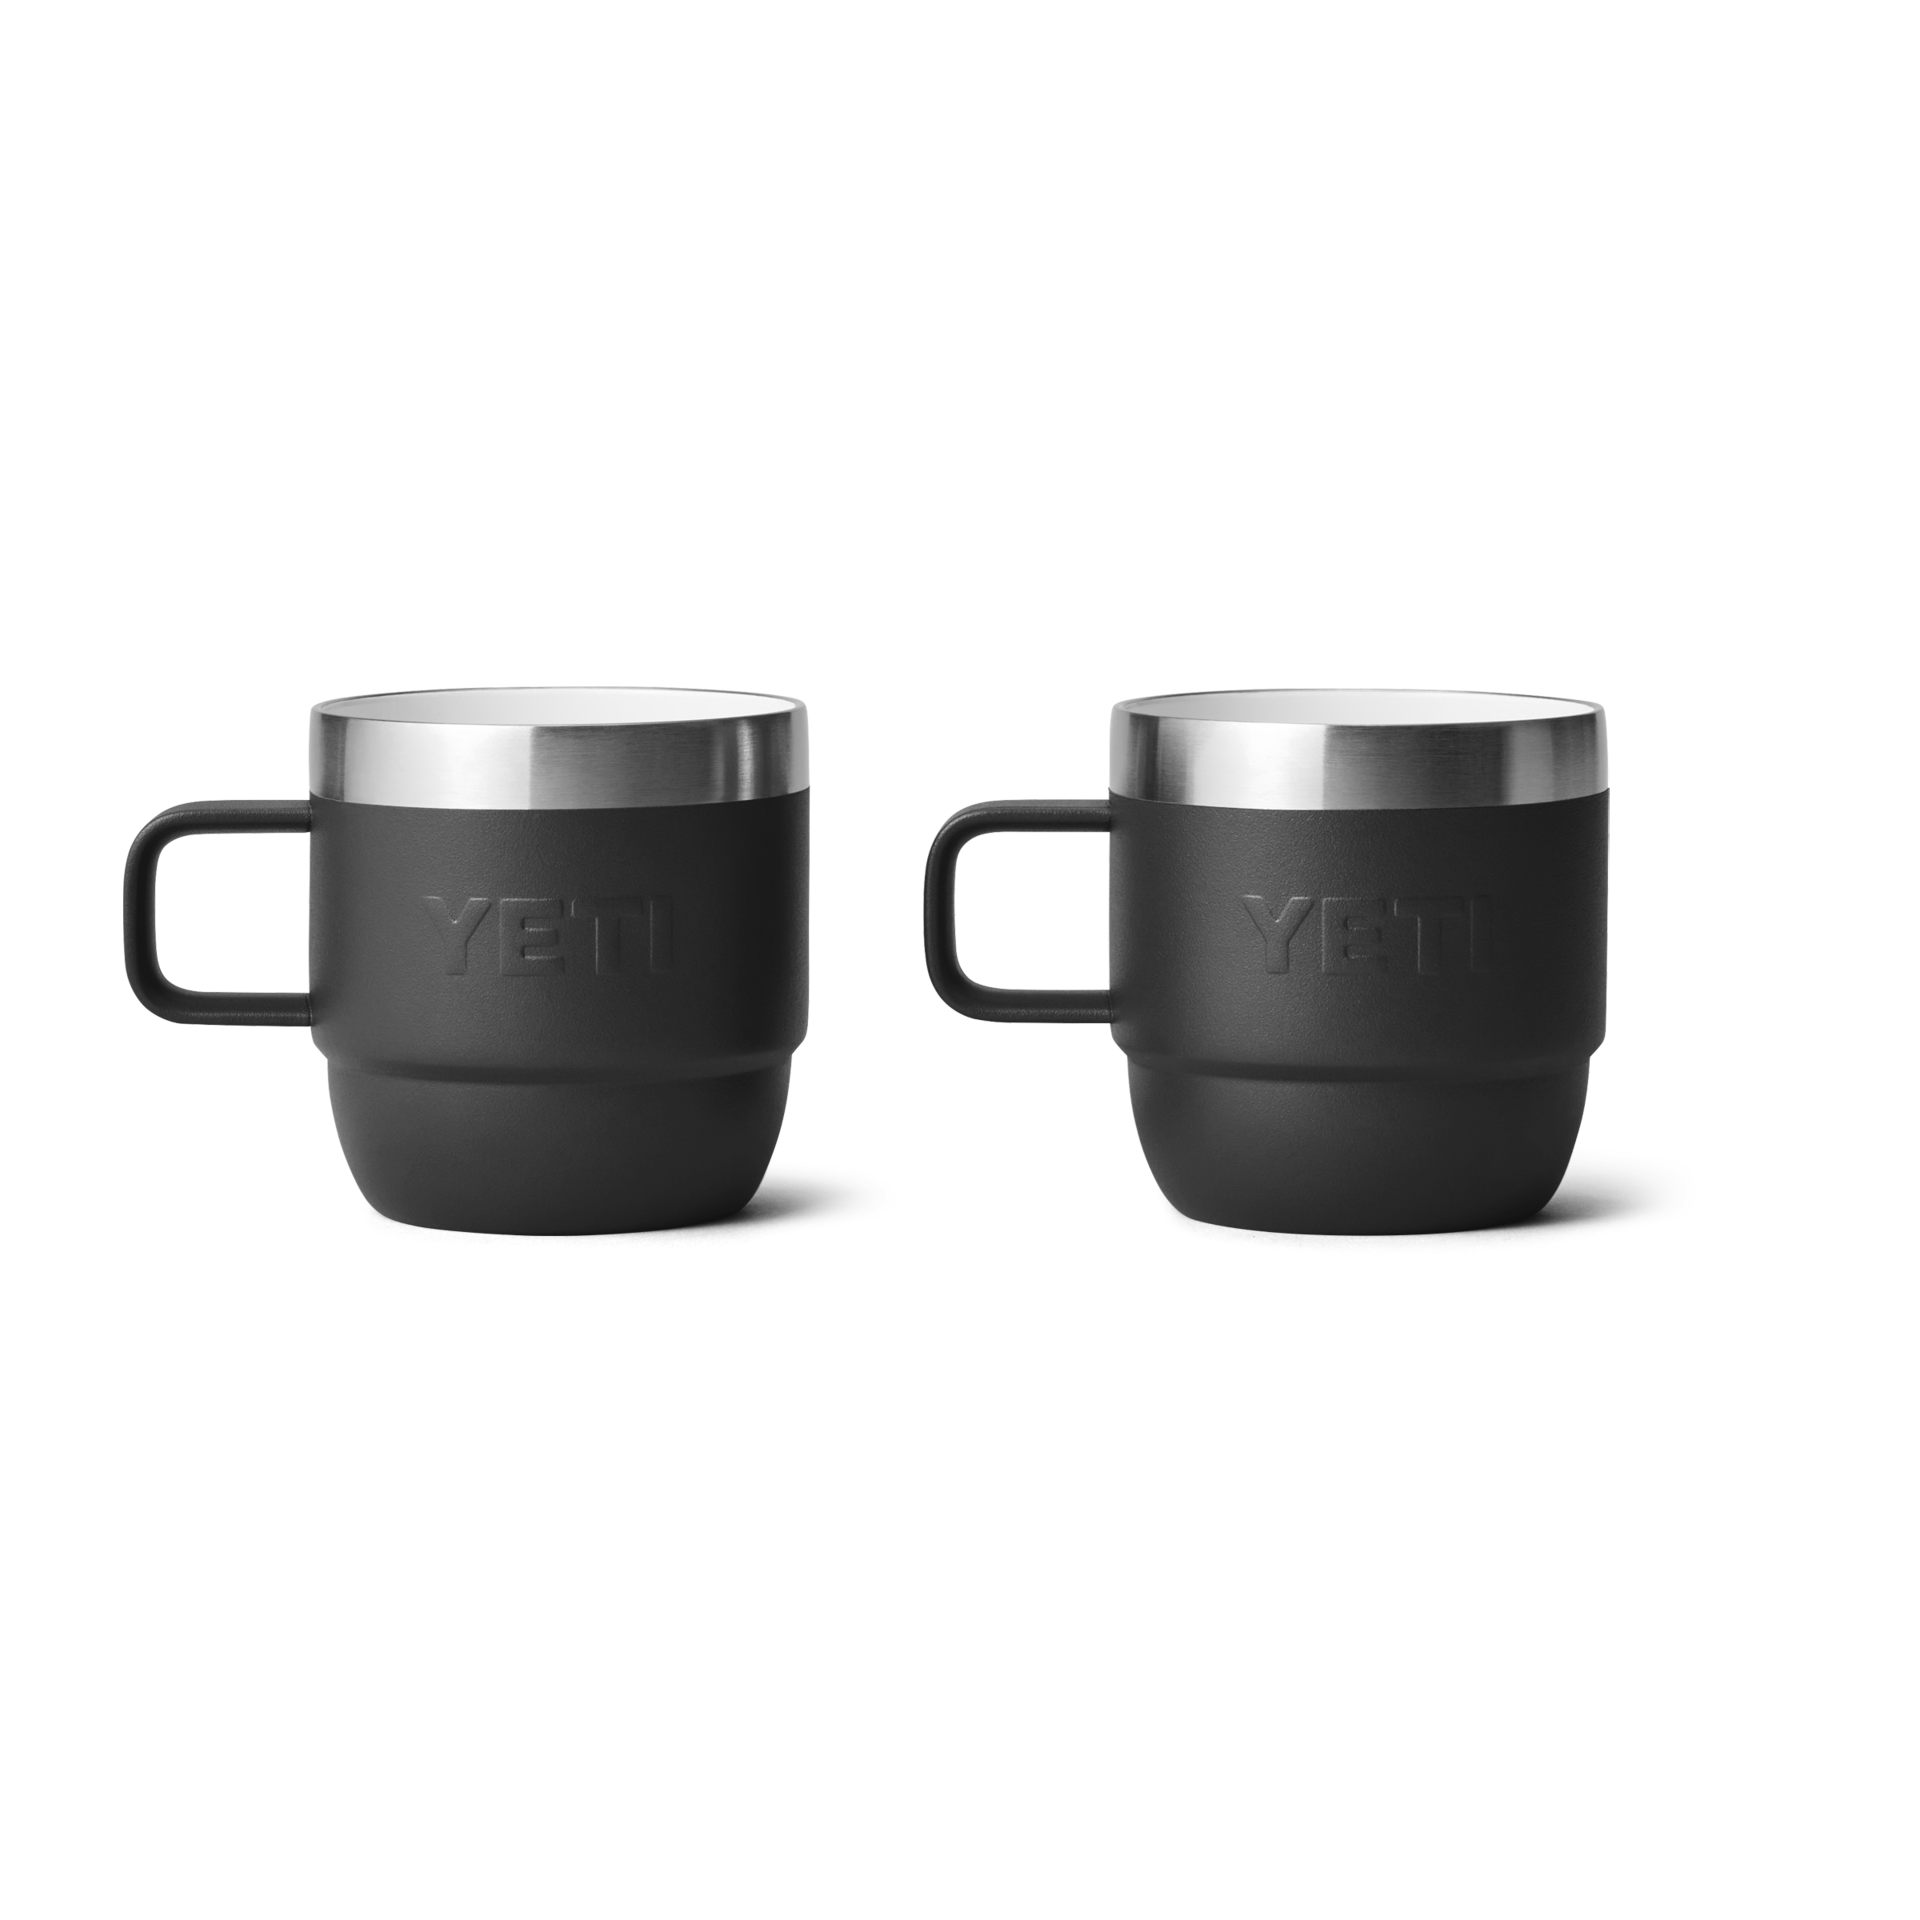 6 oz. / 177ml Stackable Mugs - Black (2 pack)